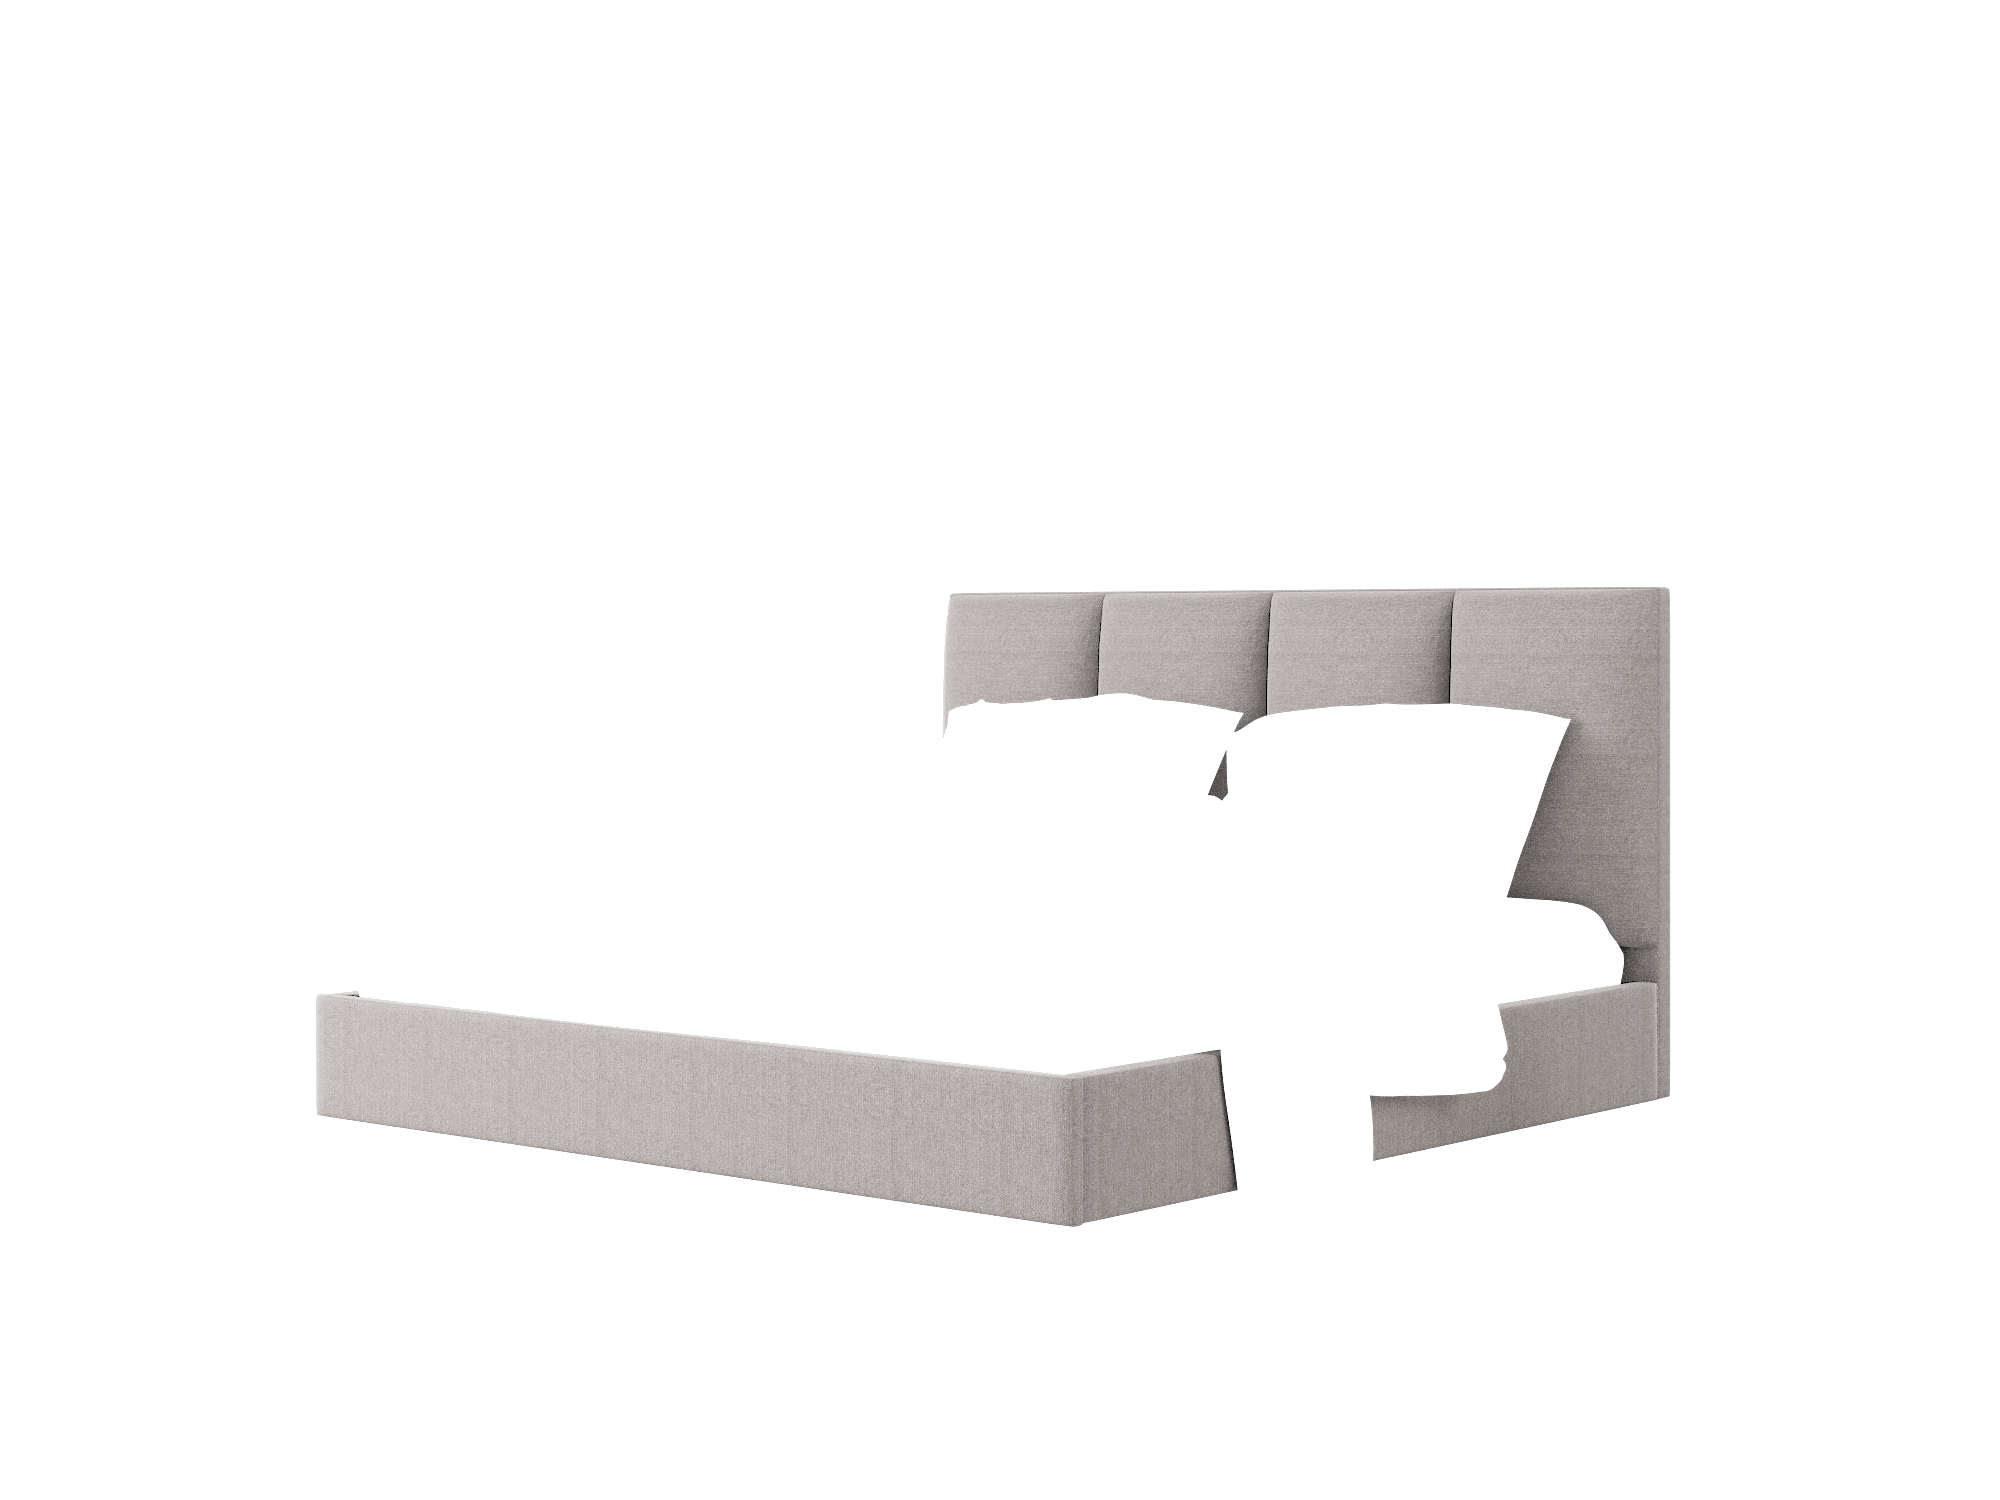 Celine Atlas_plz Silver Bed King Room Texture